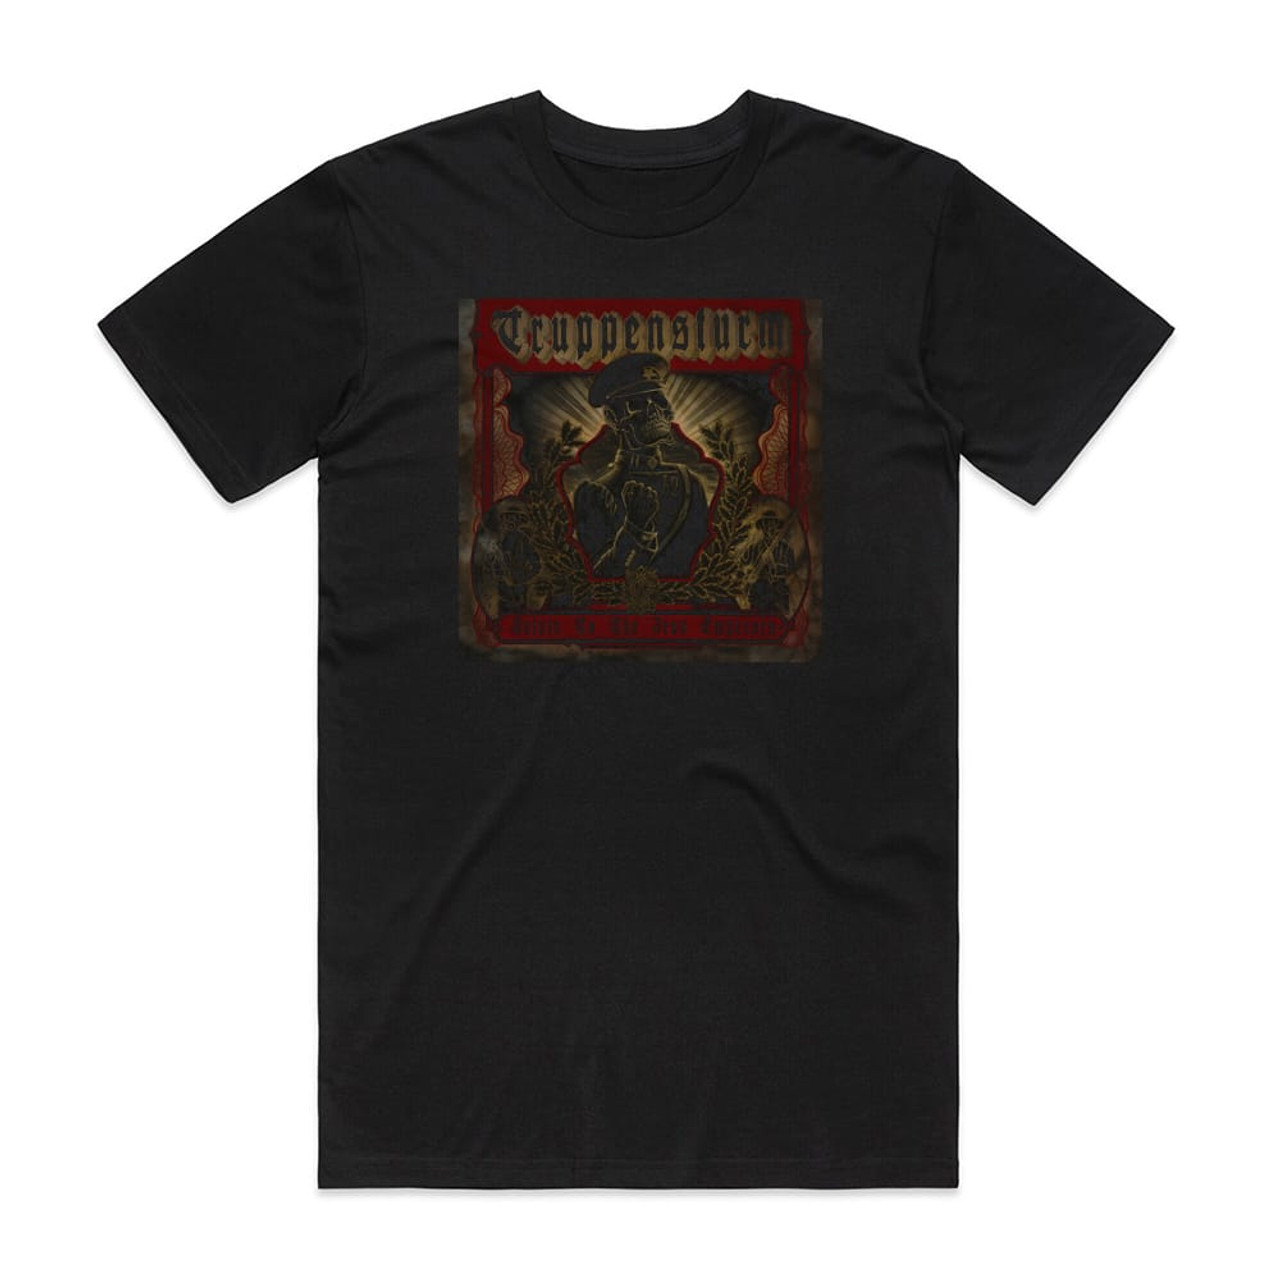 Truppensturm Salute To The Iron Emperors Album Cover T-Shirt Black